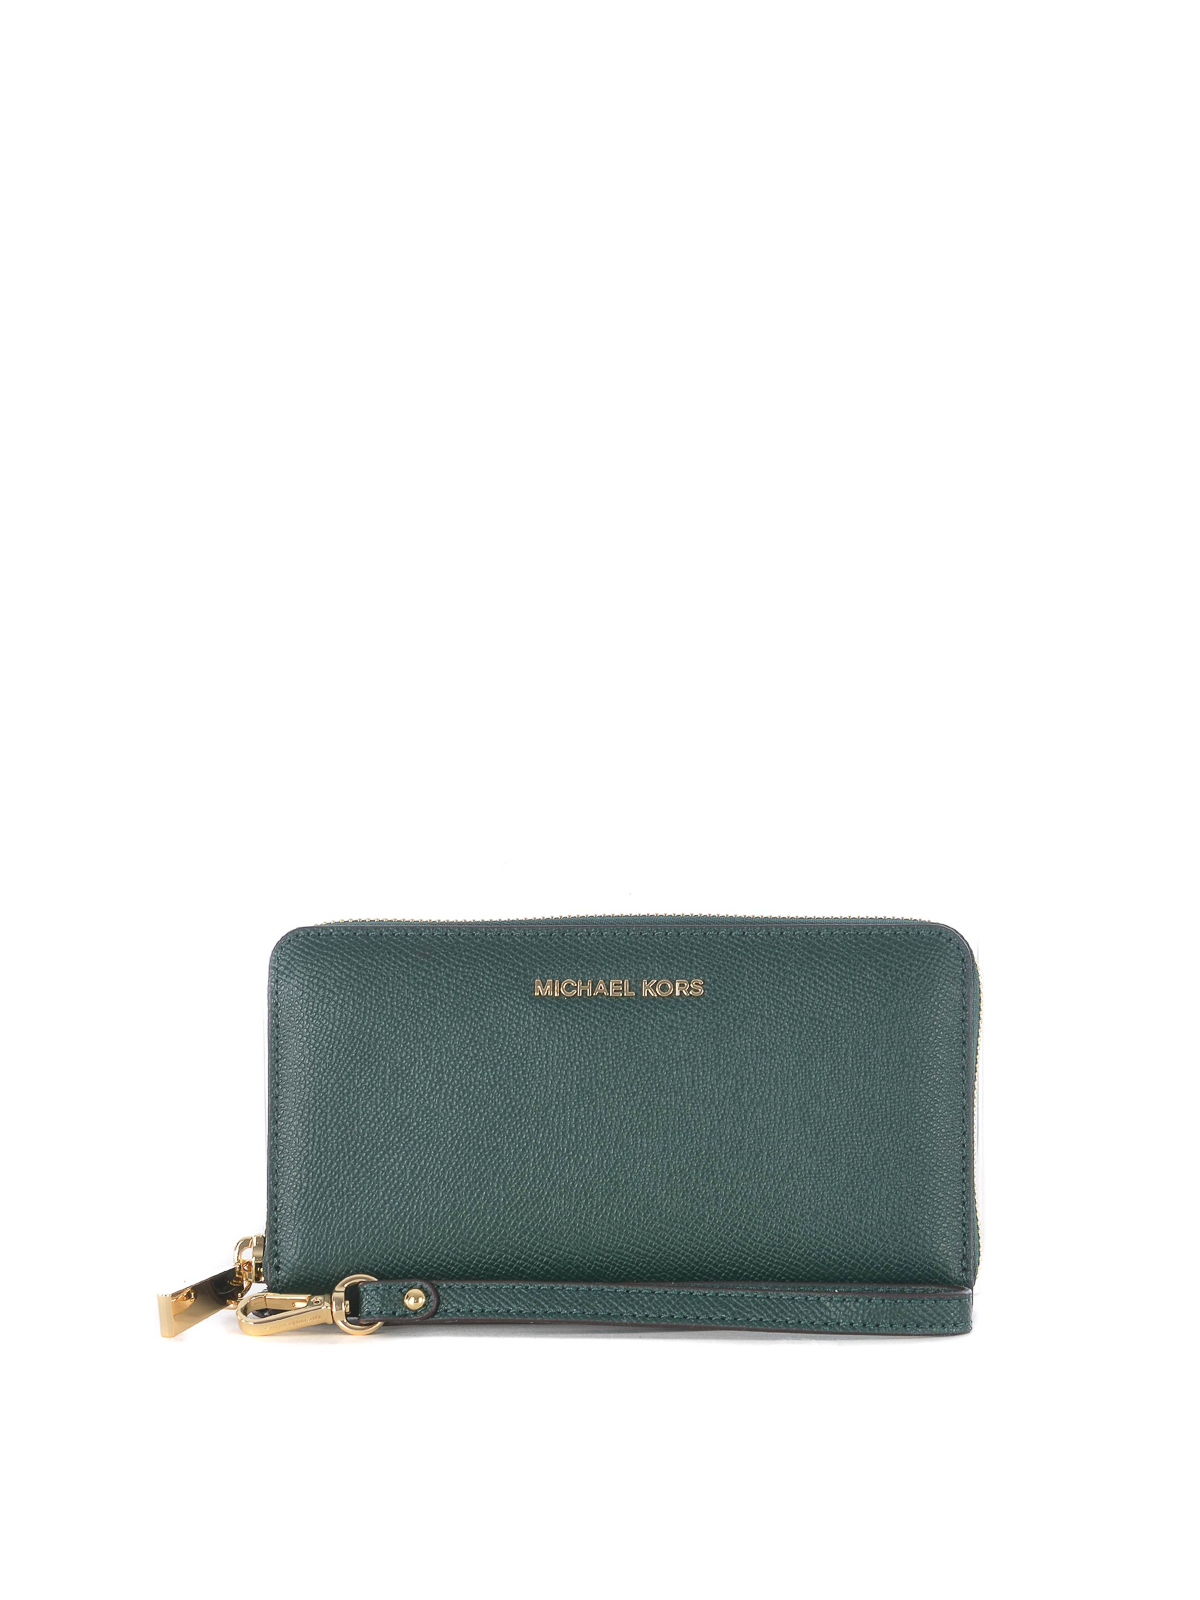 Wallets & purses Michael Kors - Jet Set Travel dark green leather